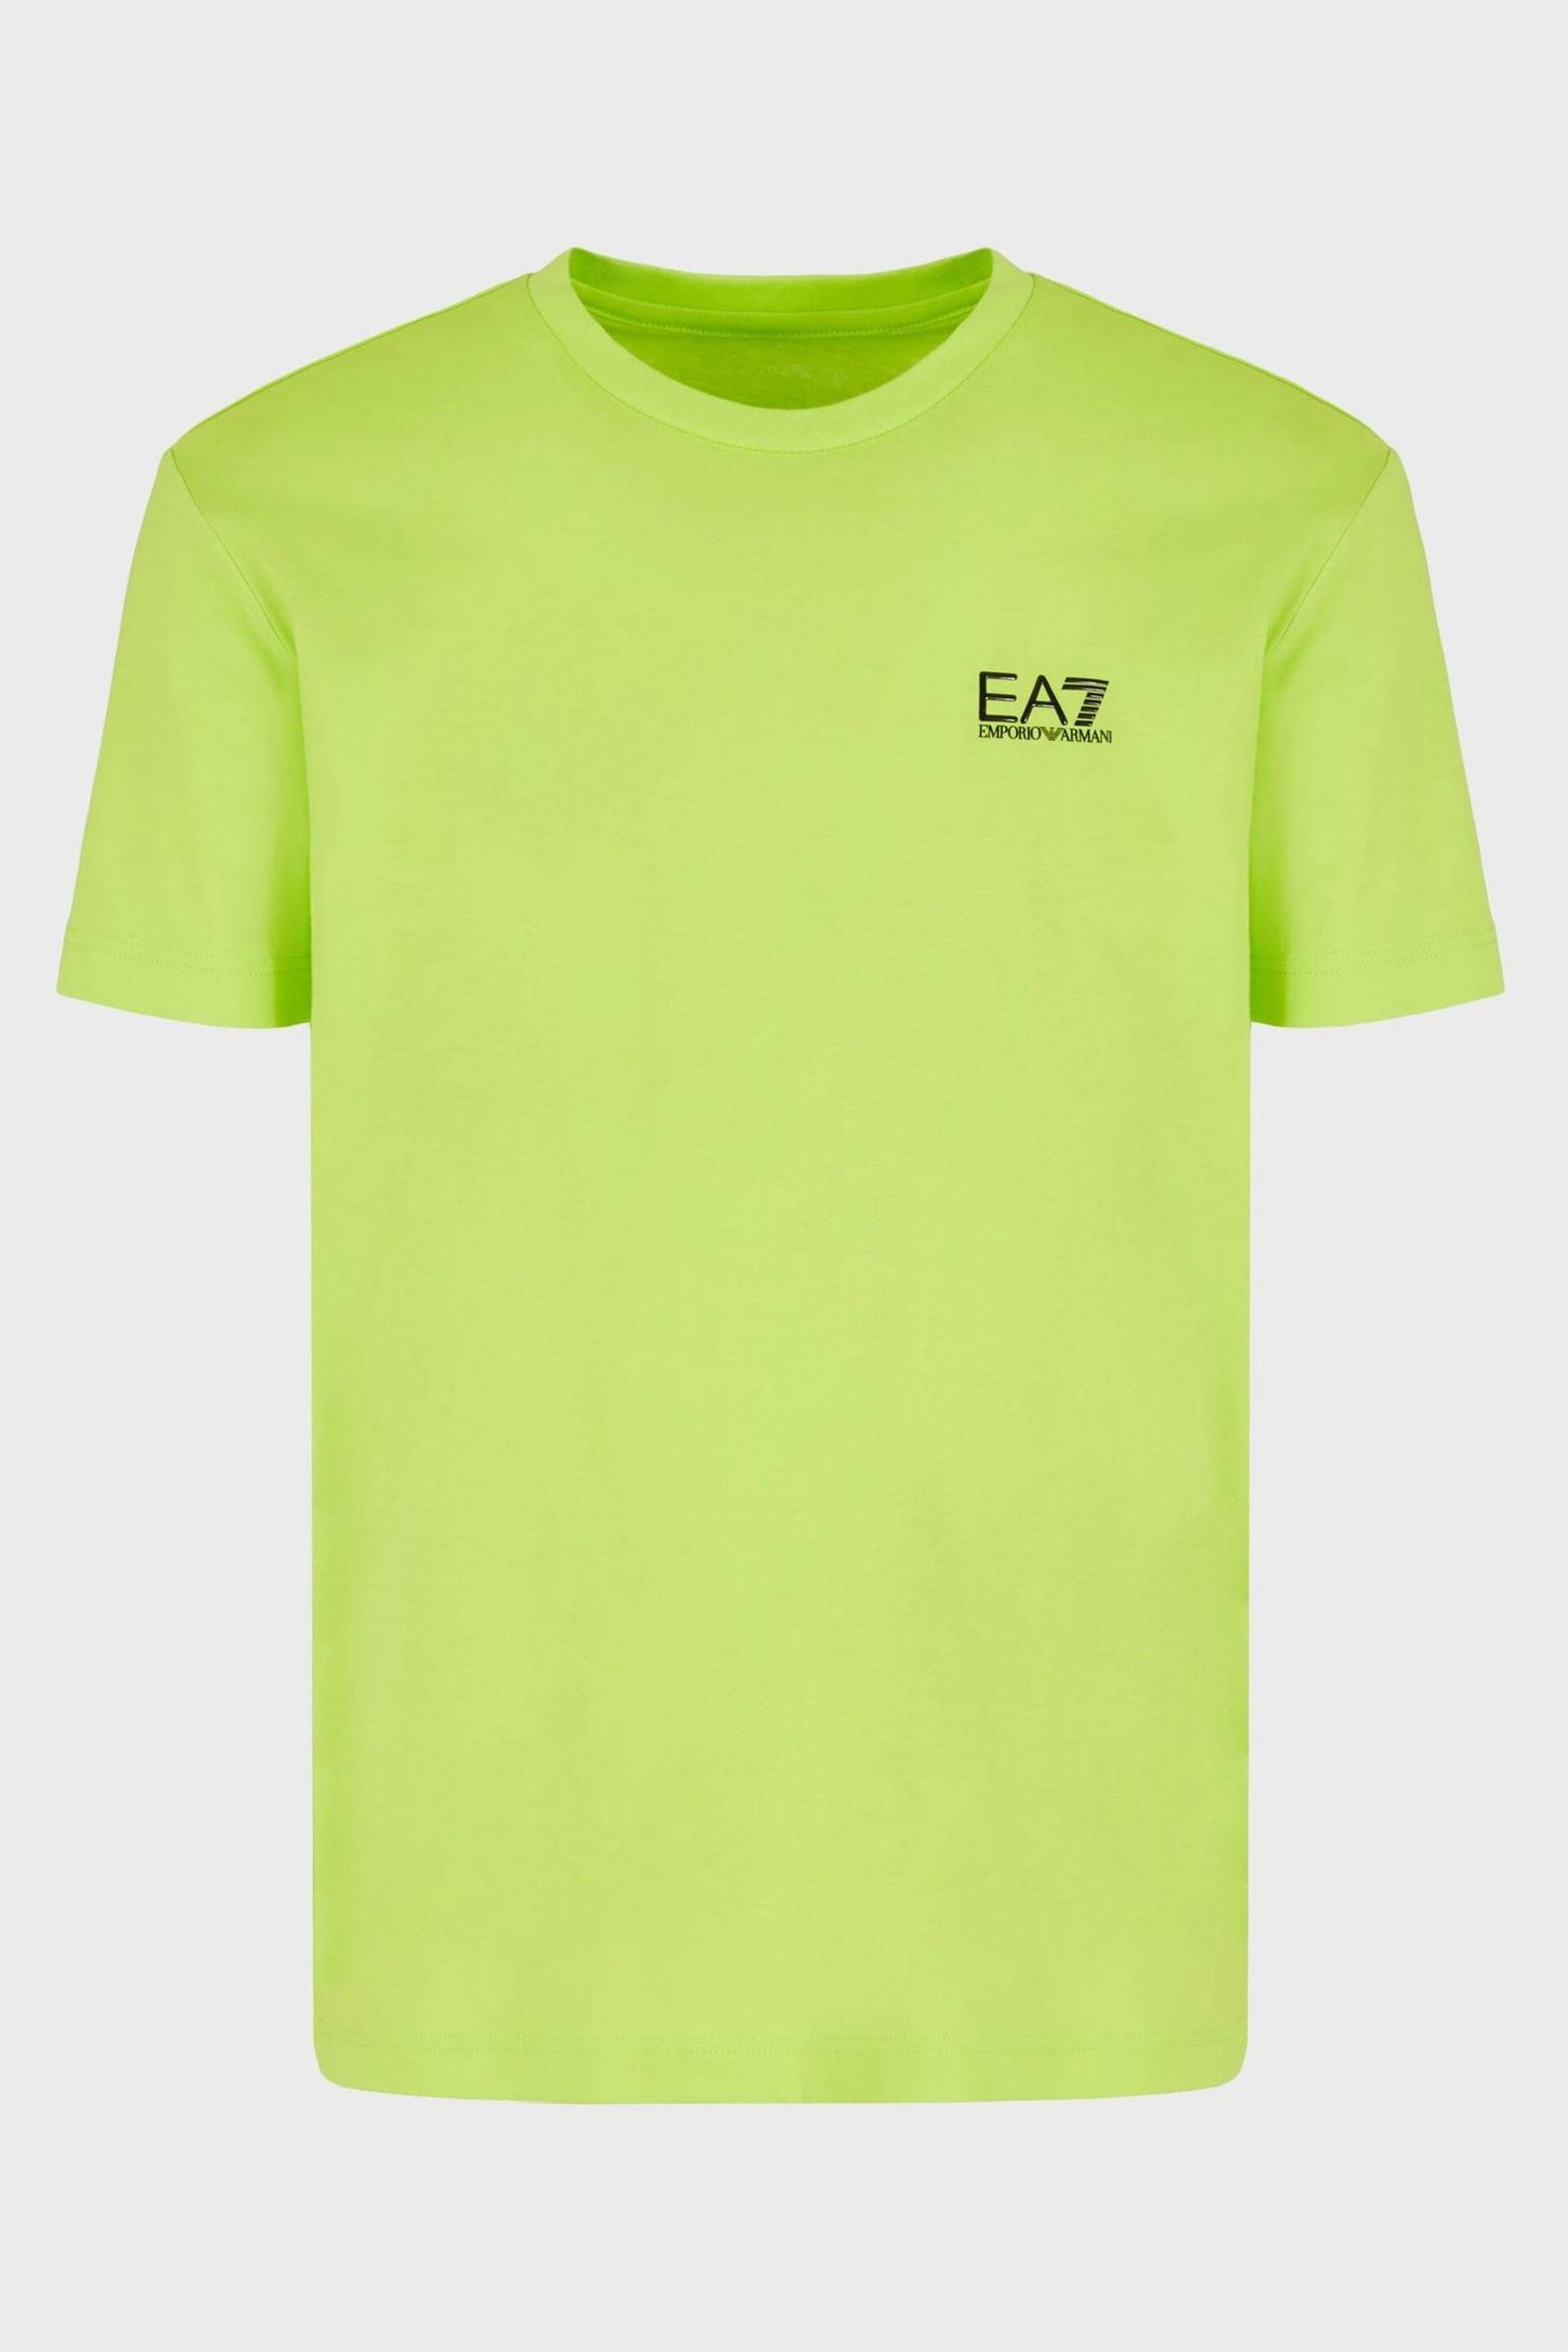 Emporio Armani EA7 Logo T-Shirt - Image 5 of 7